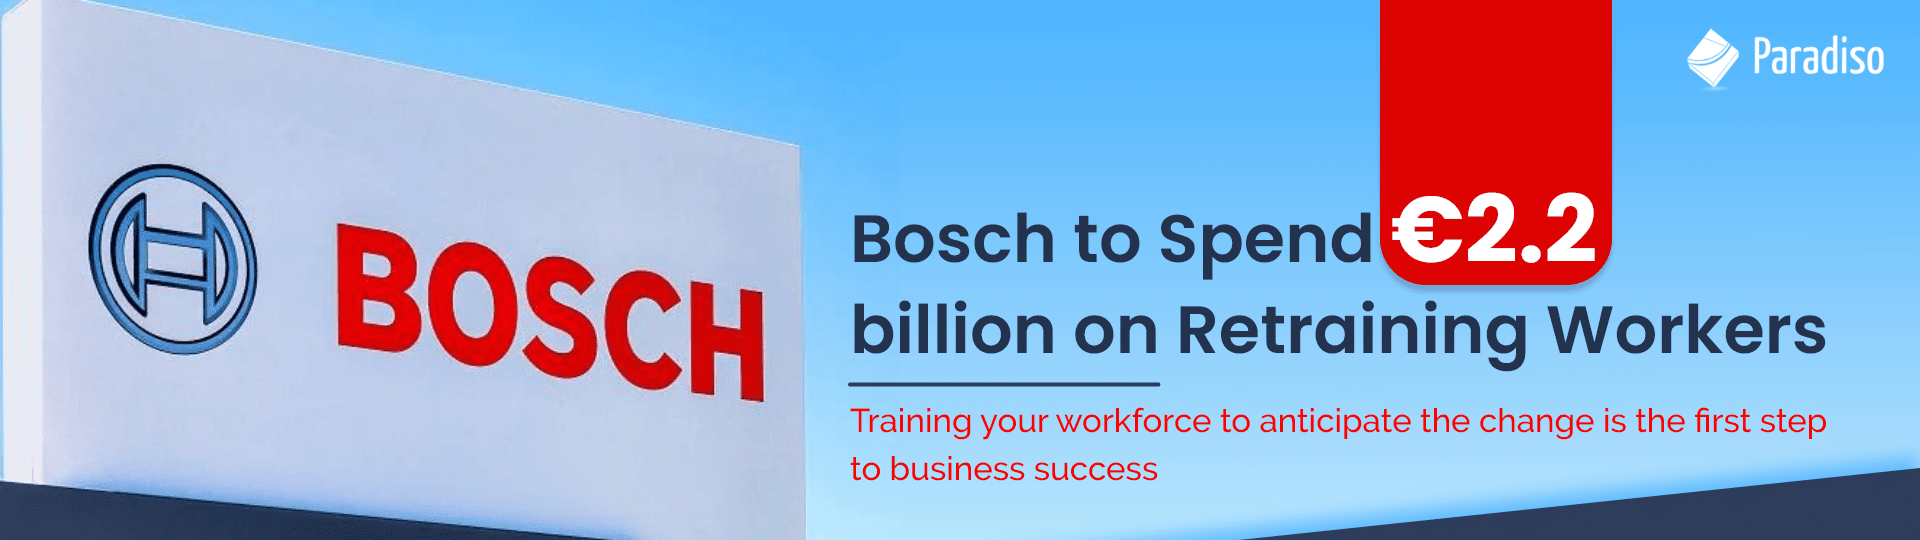 Reskilling Bosch to Spend €2.2billion on Retraining Workers